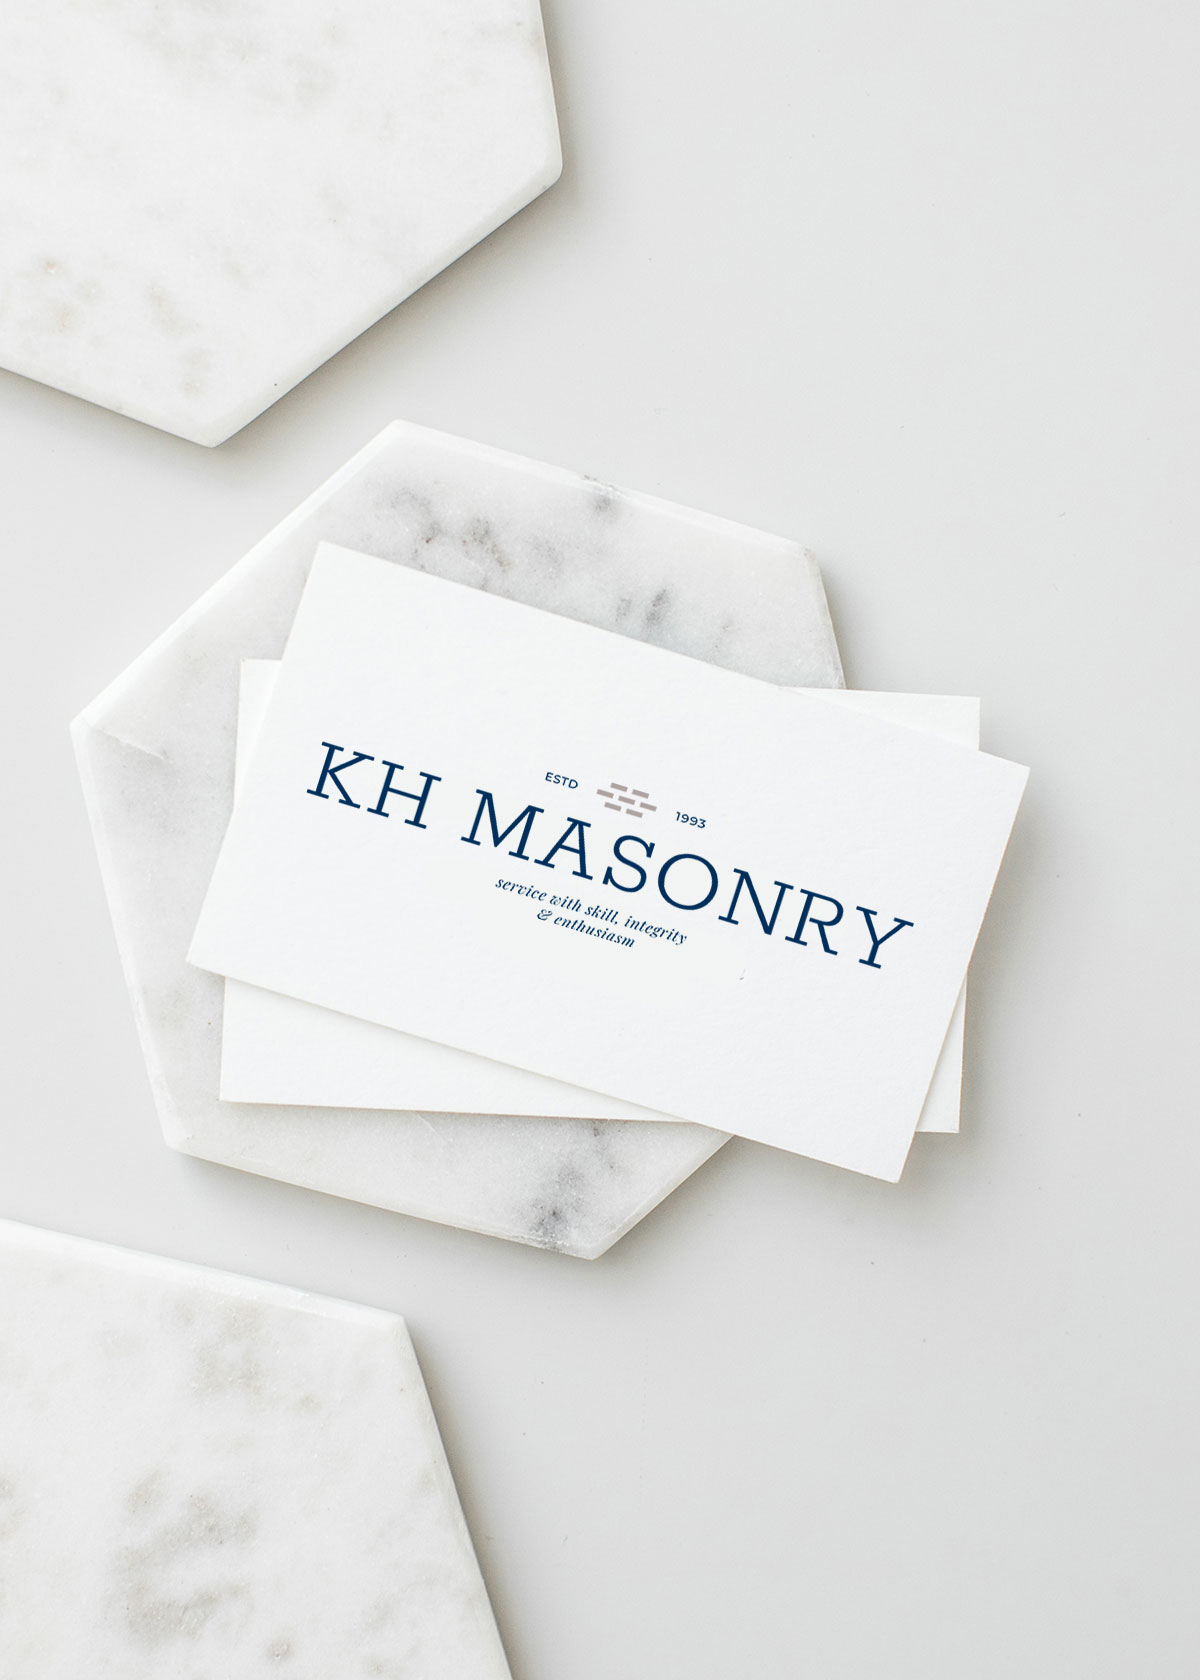 KH Masonry business card mockup with new wordmark logo design